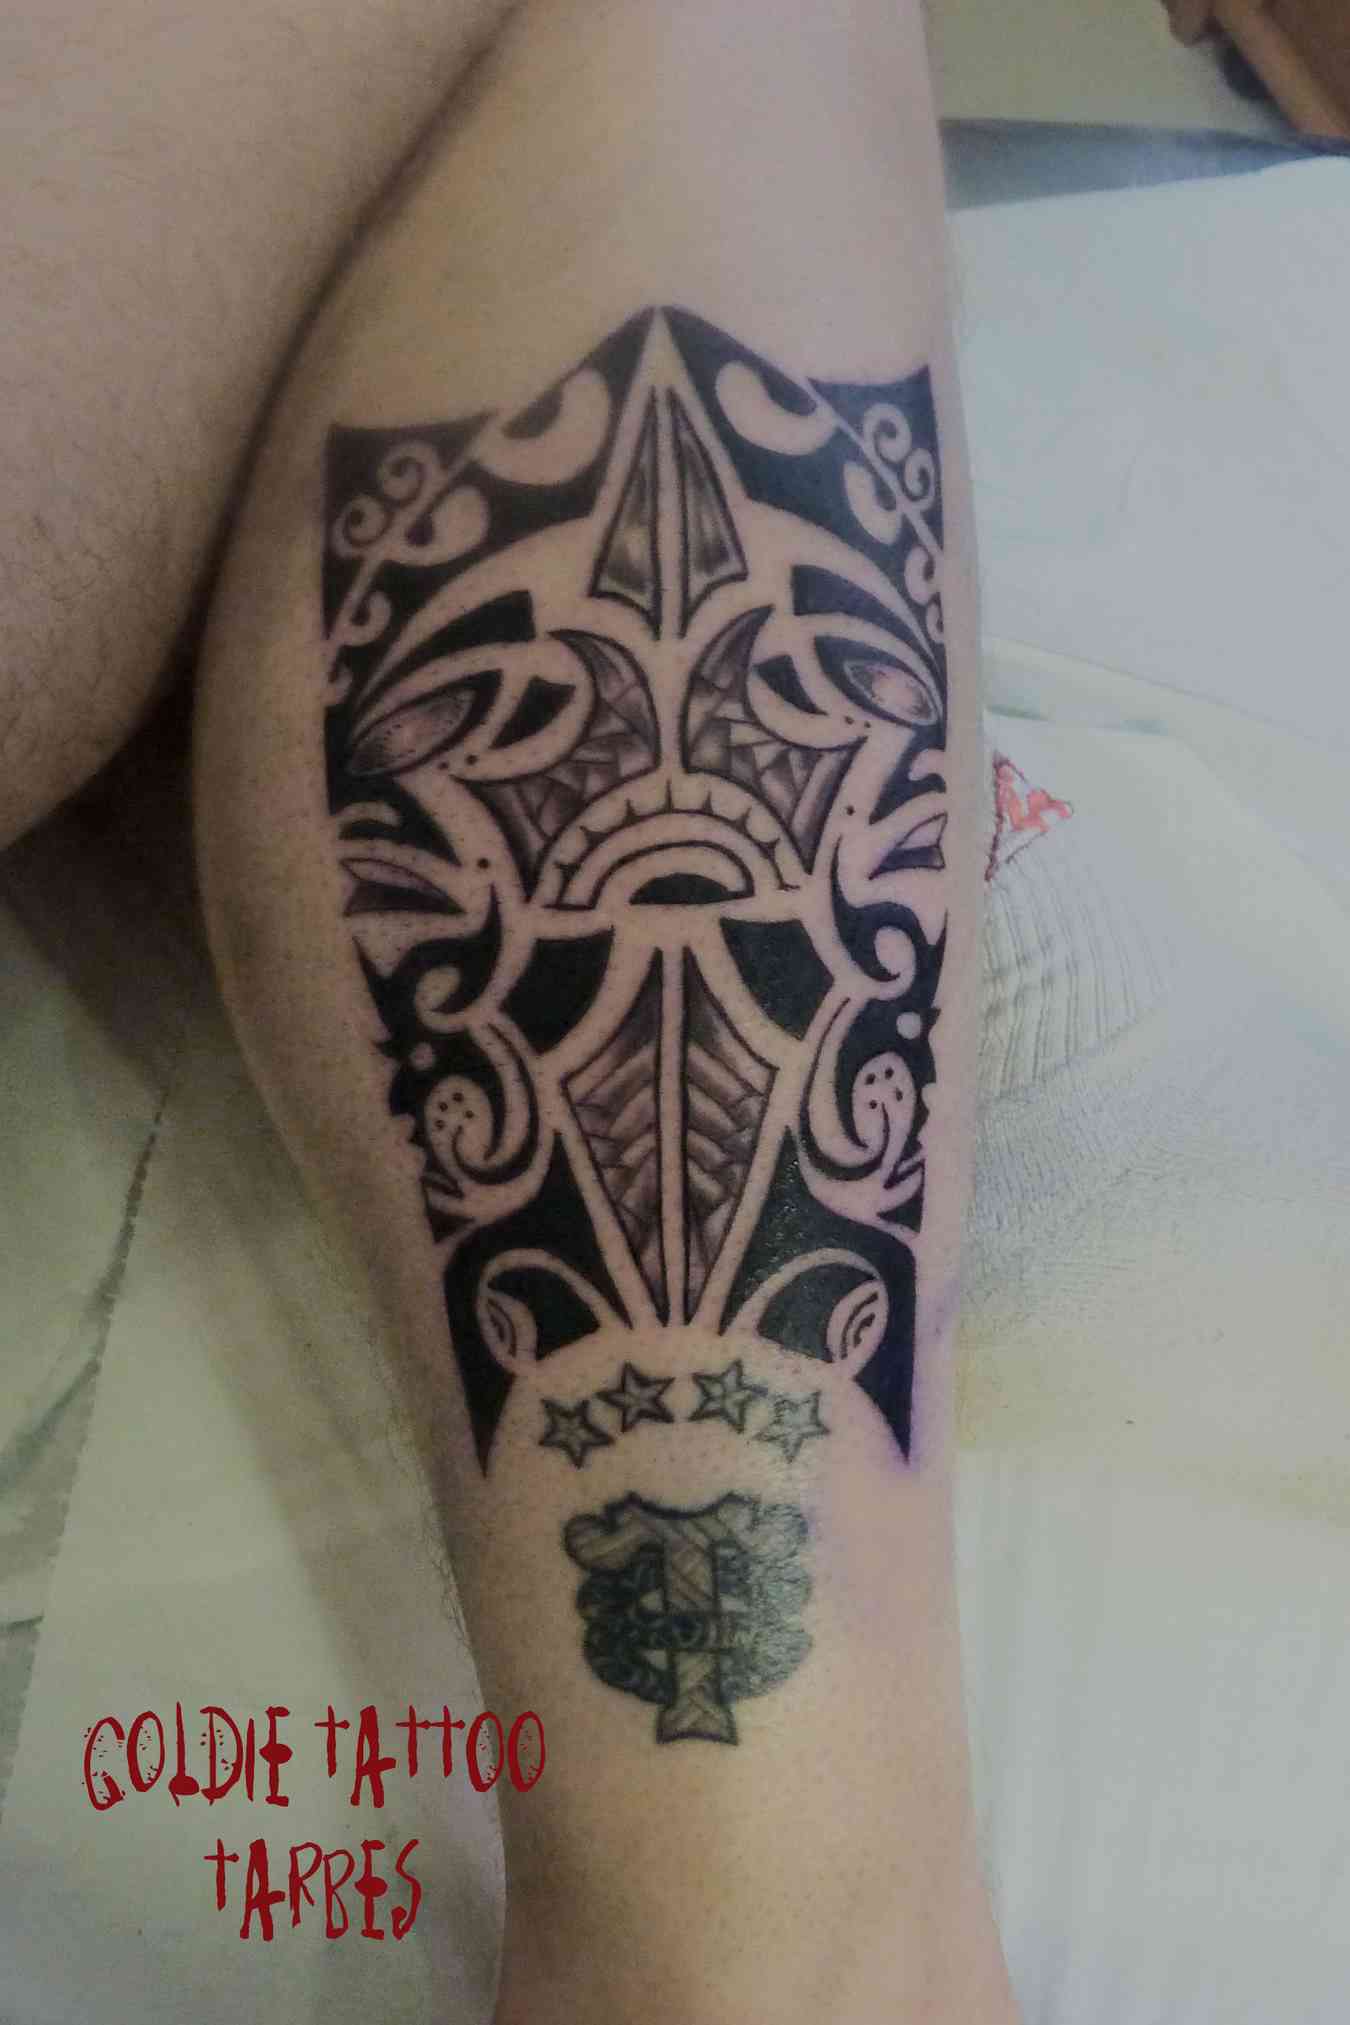 goldie-tattoo-tarbes-9-11-2013-continuation-maori-stade-toulousain-hdtv-1080site10-11-13-a.jpg